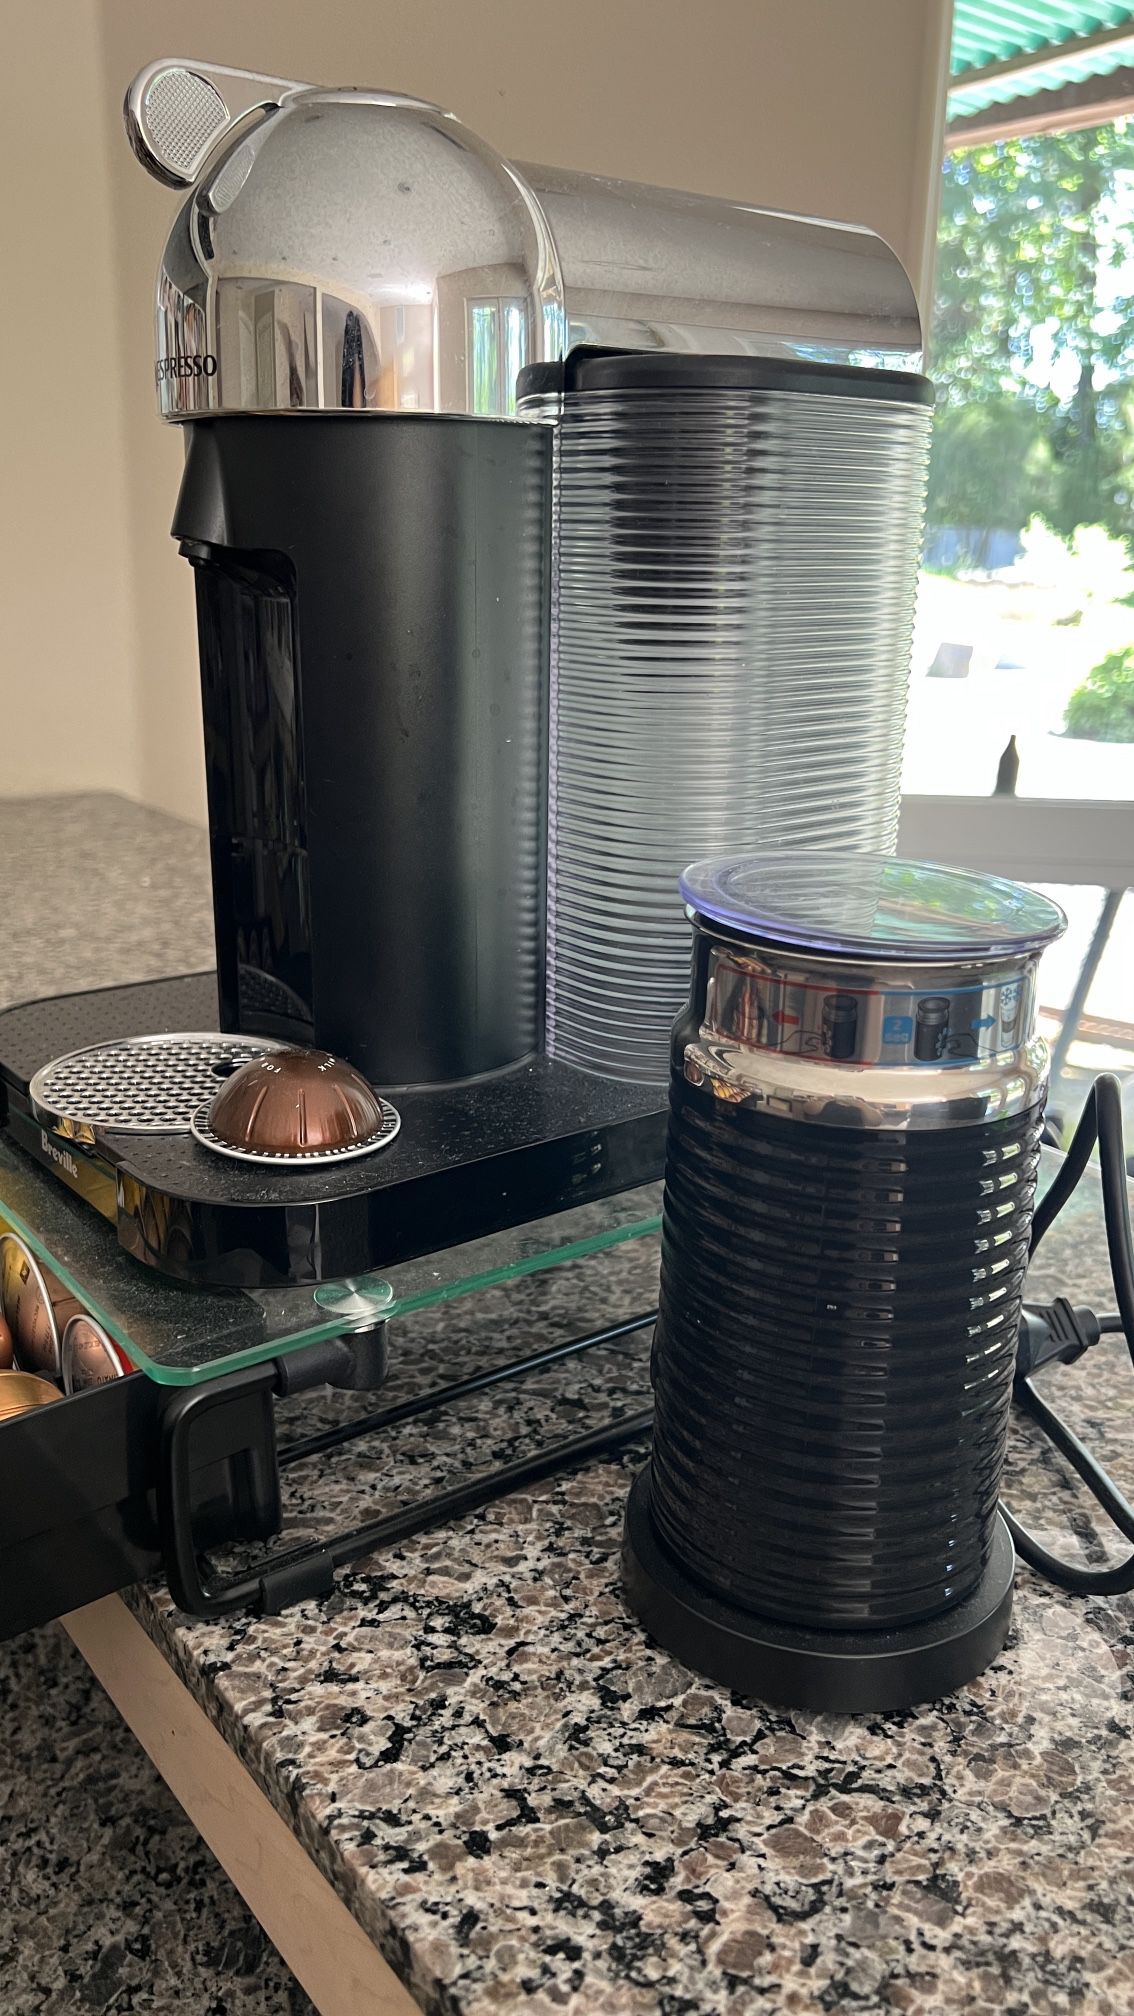 Nespresso Vertuo Coffee and Espresso Machine with tray and capsules